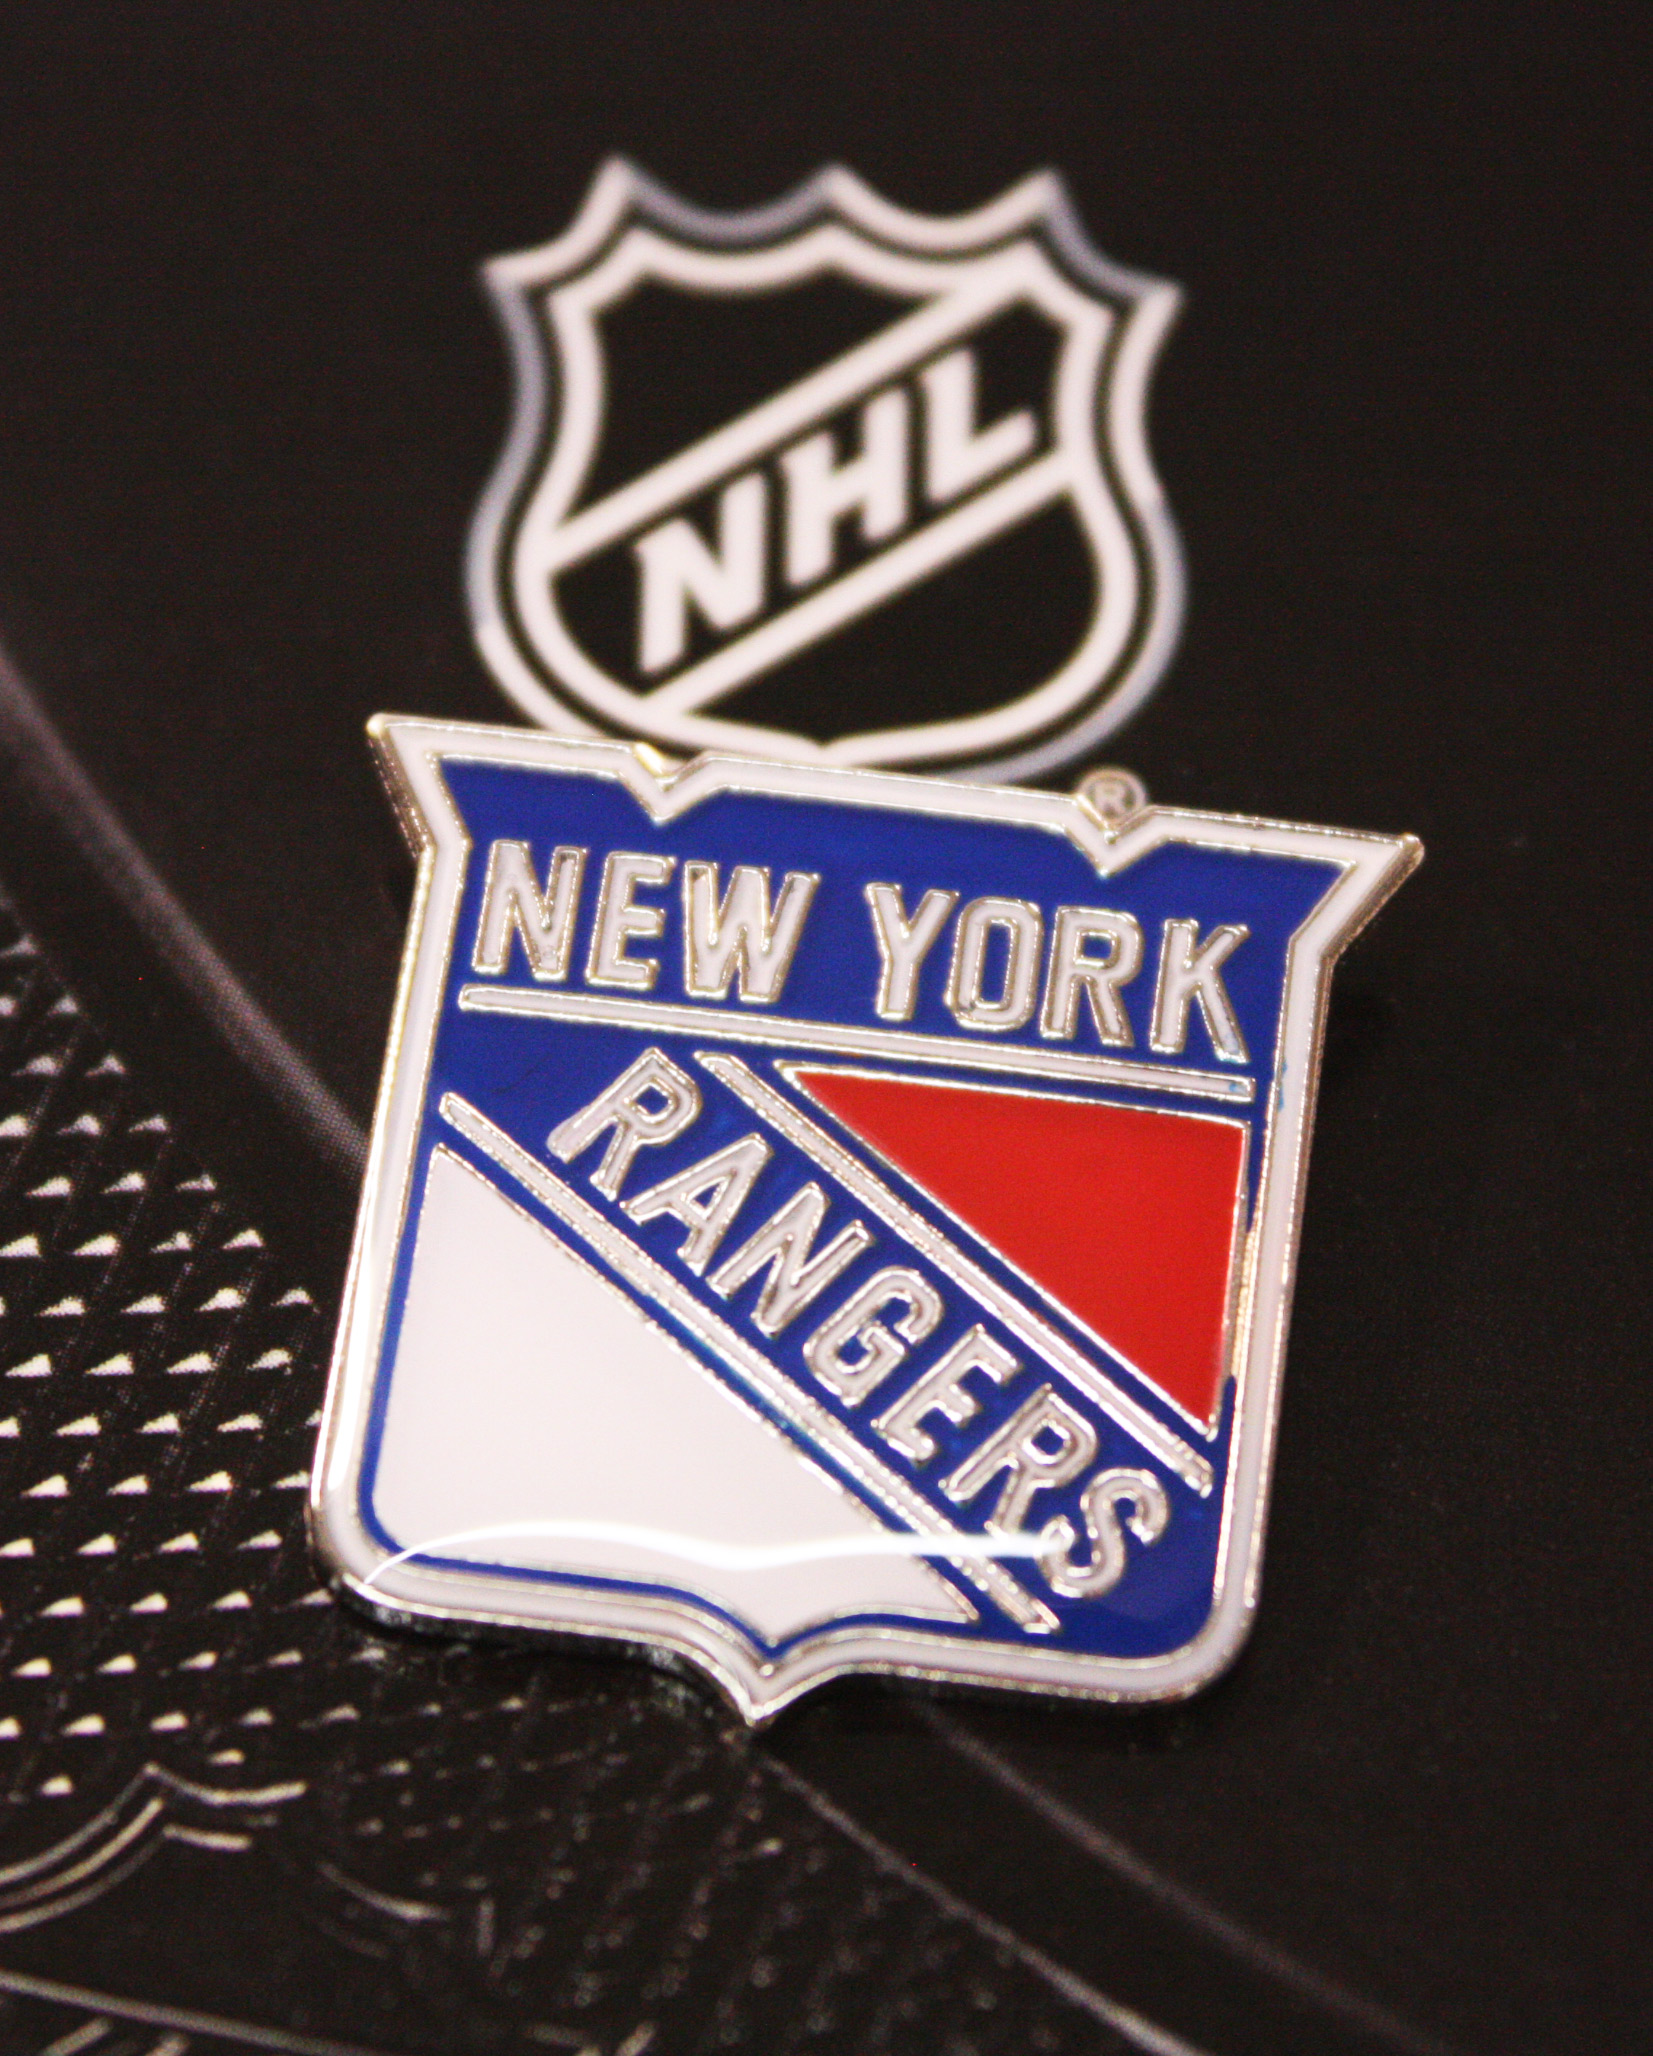 Pin on New York Rangers - NHL